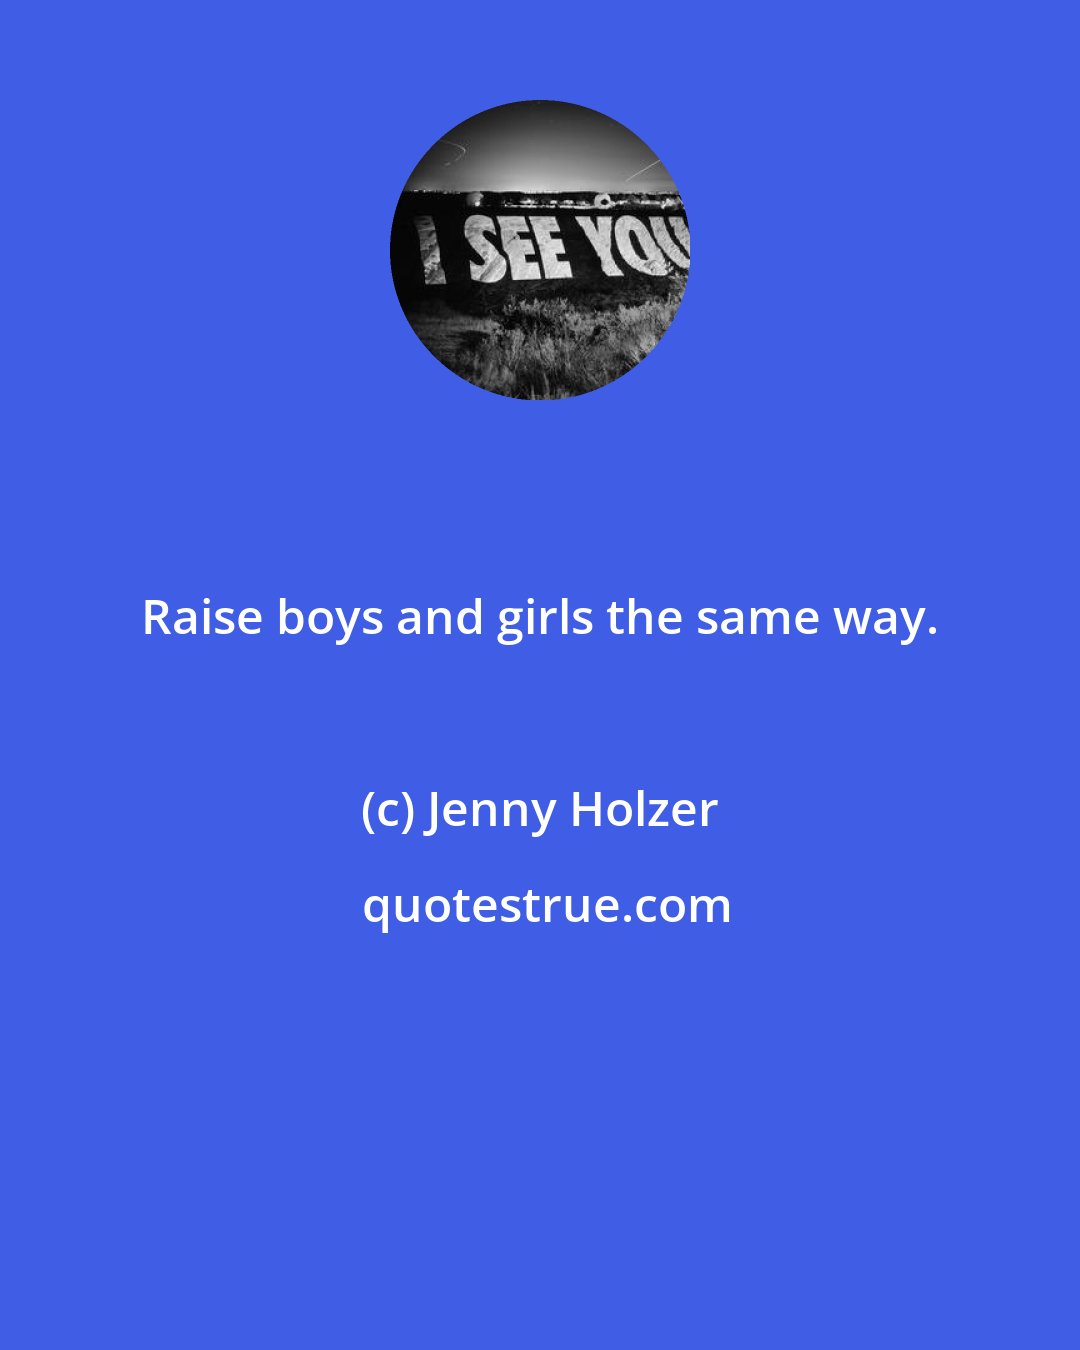 Jenny Holzer: Raise boys and girls the same way.